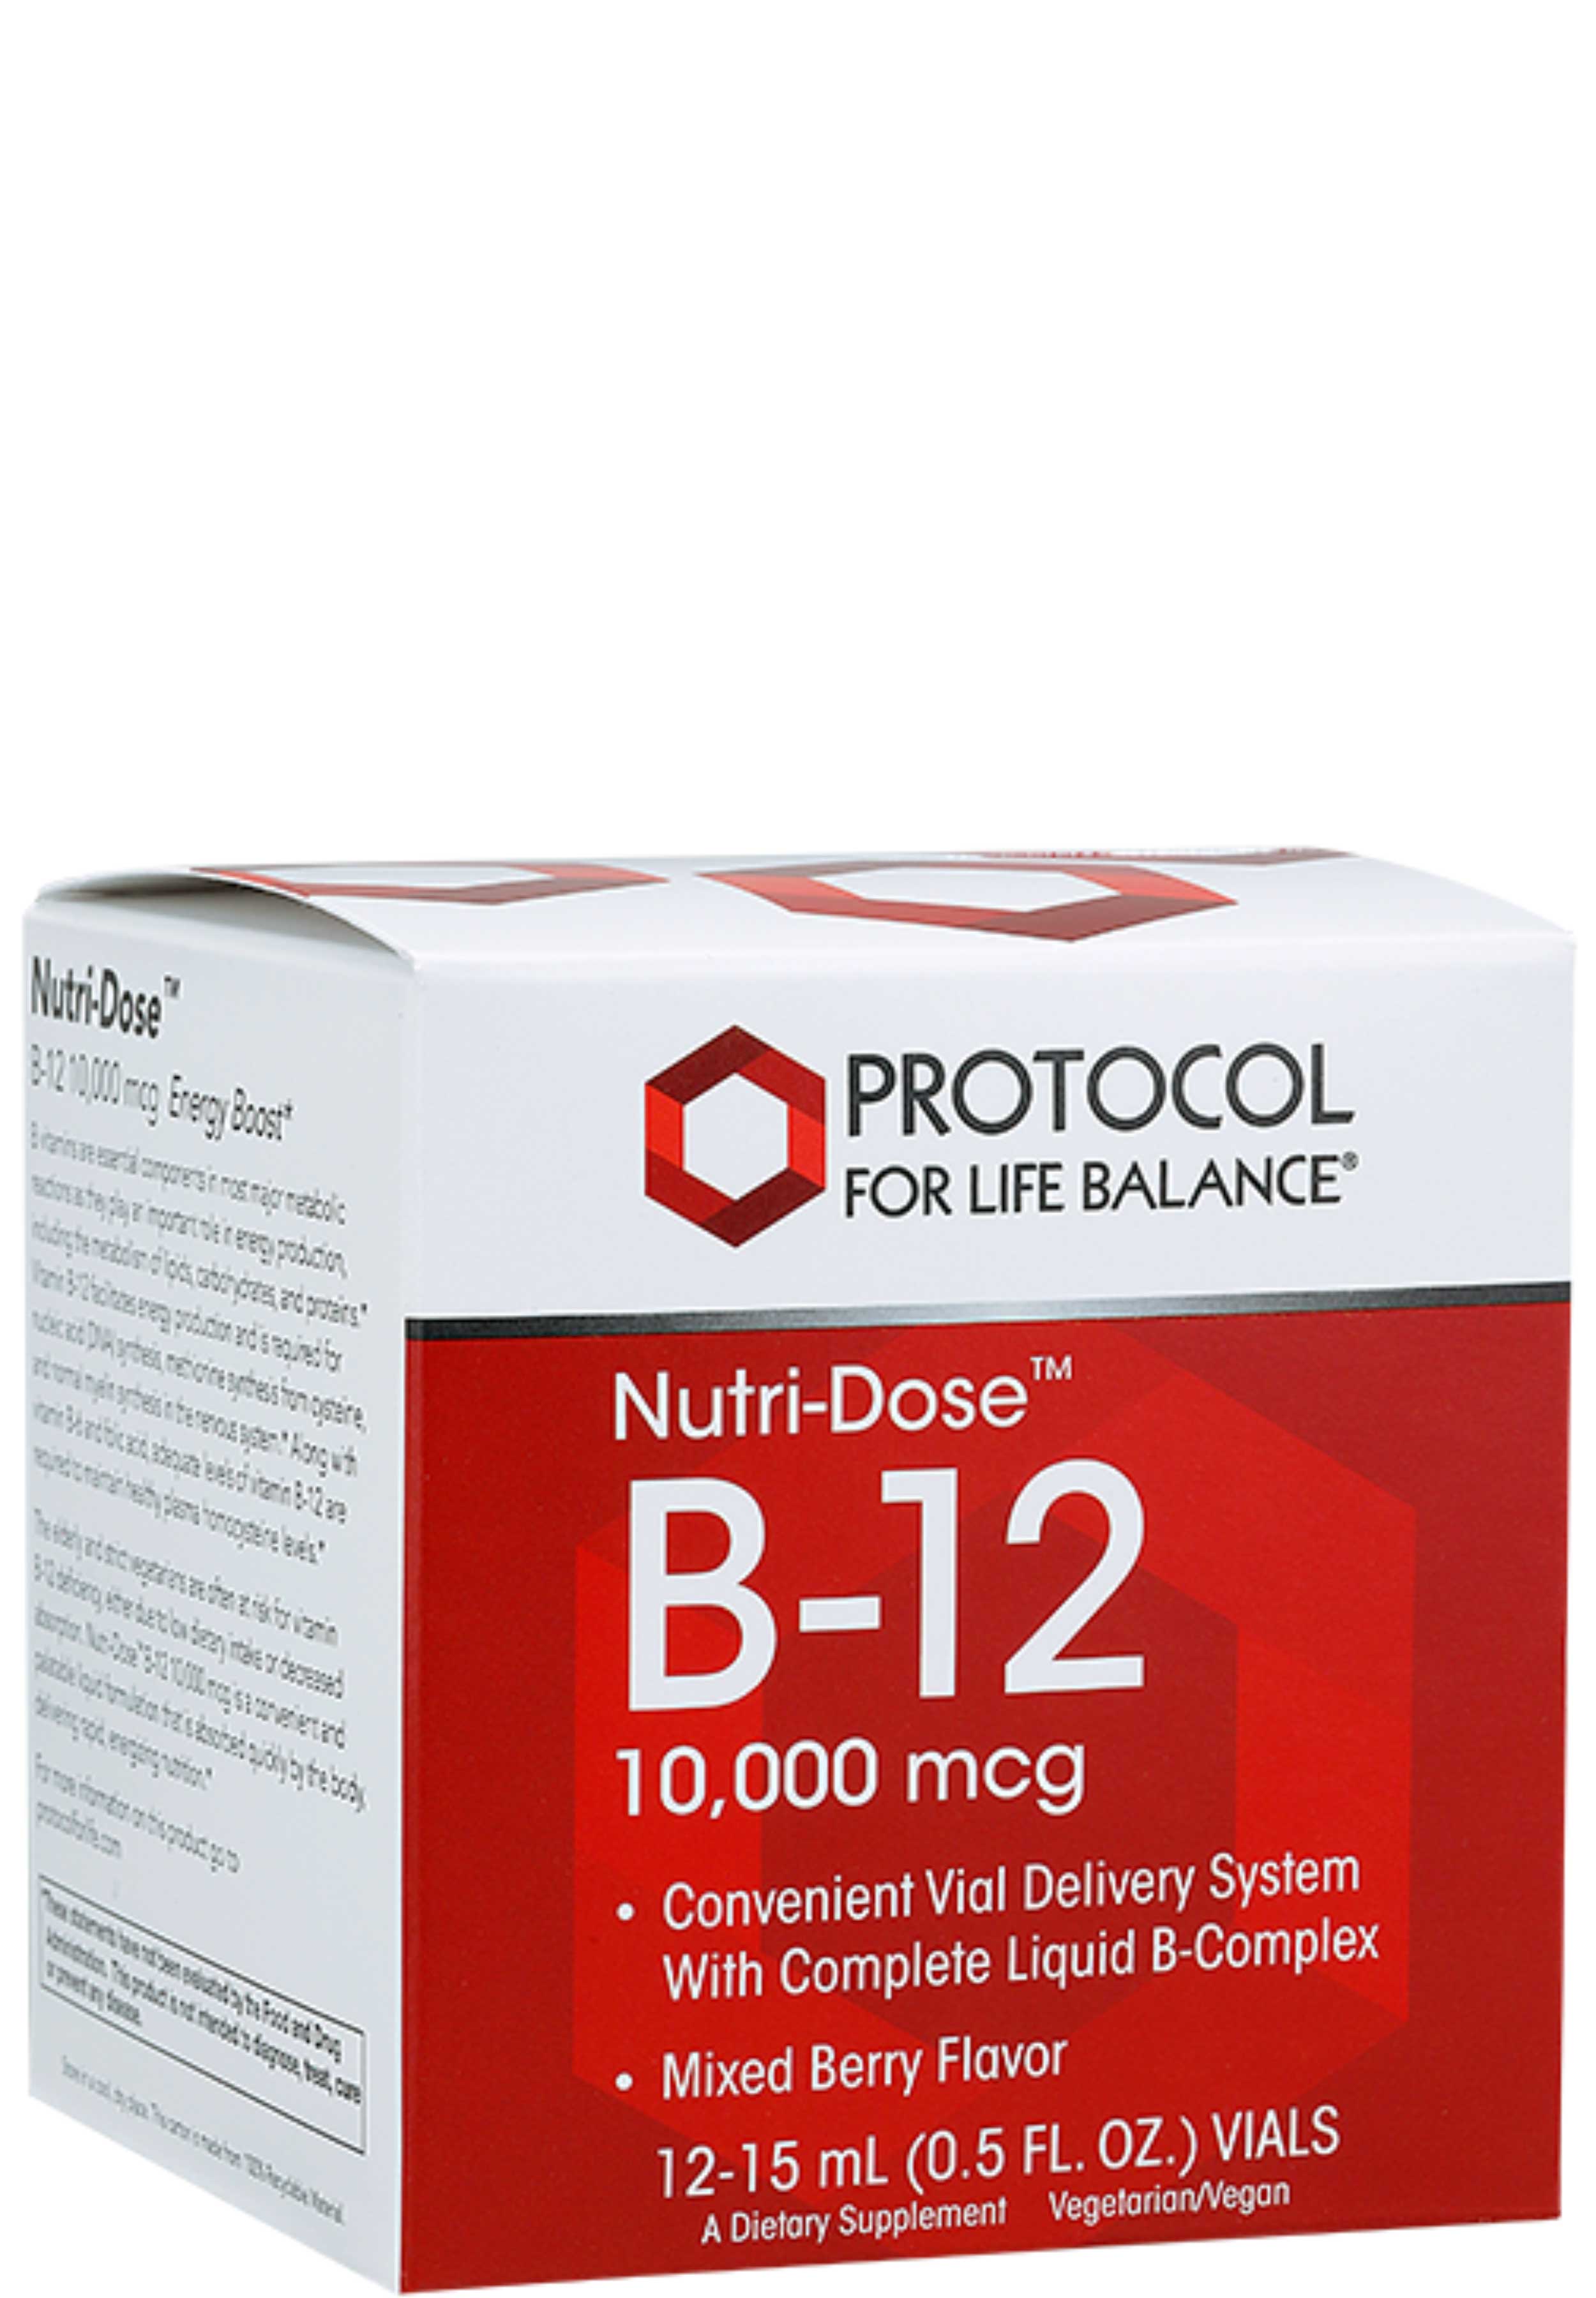 Protocol for Life Balance Nutri-Dose B-12